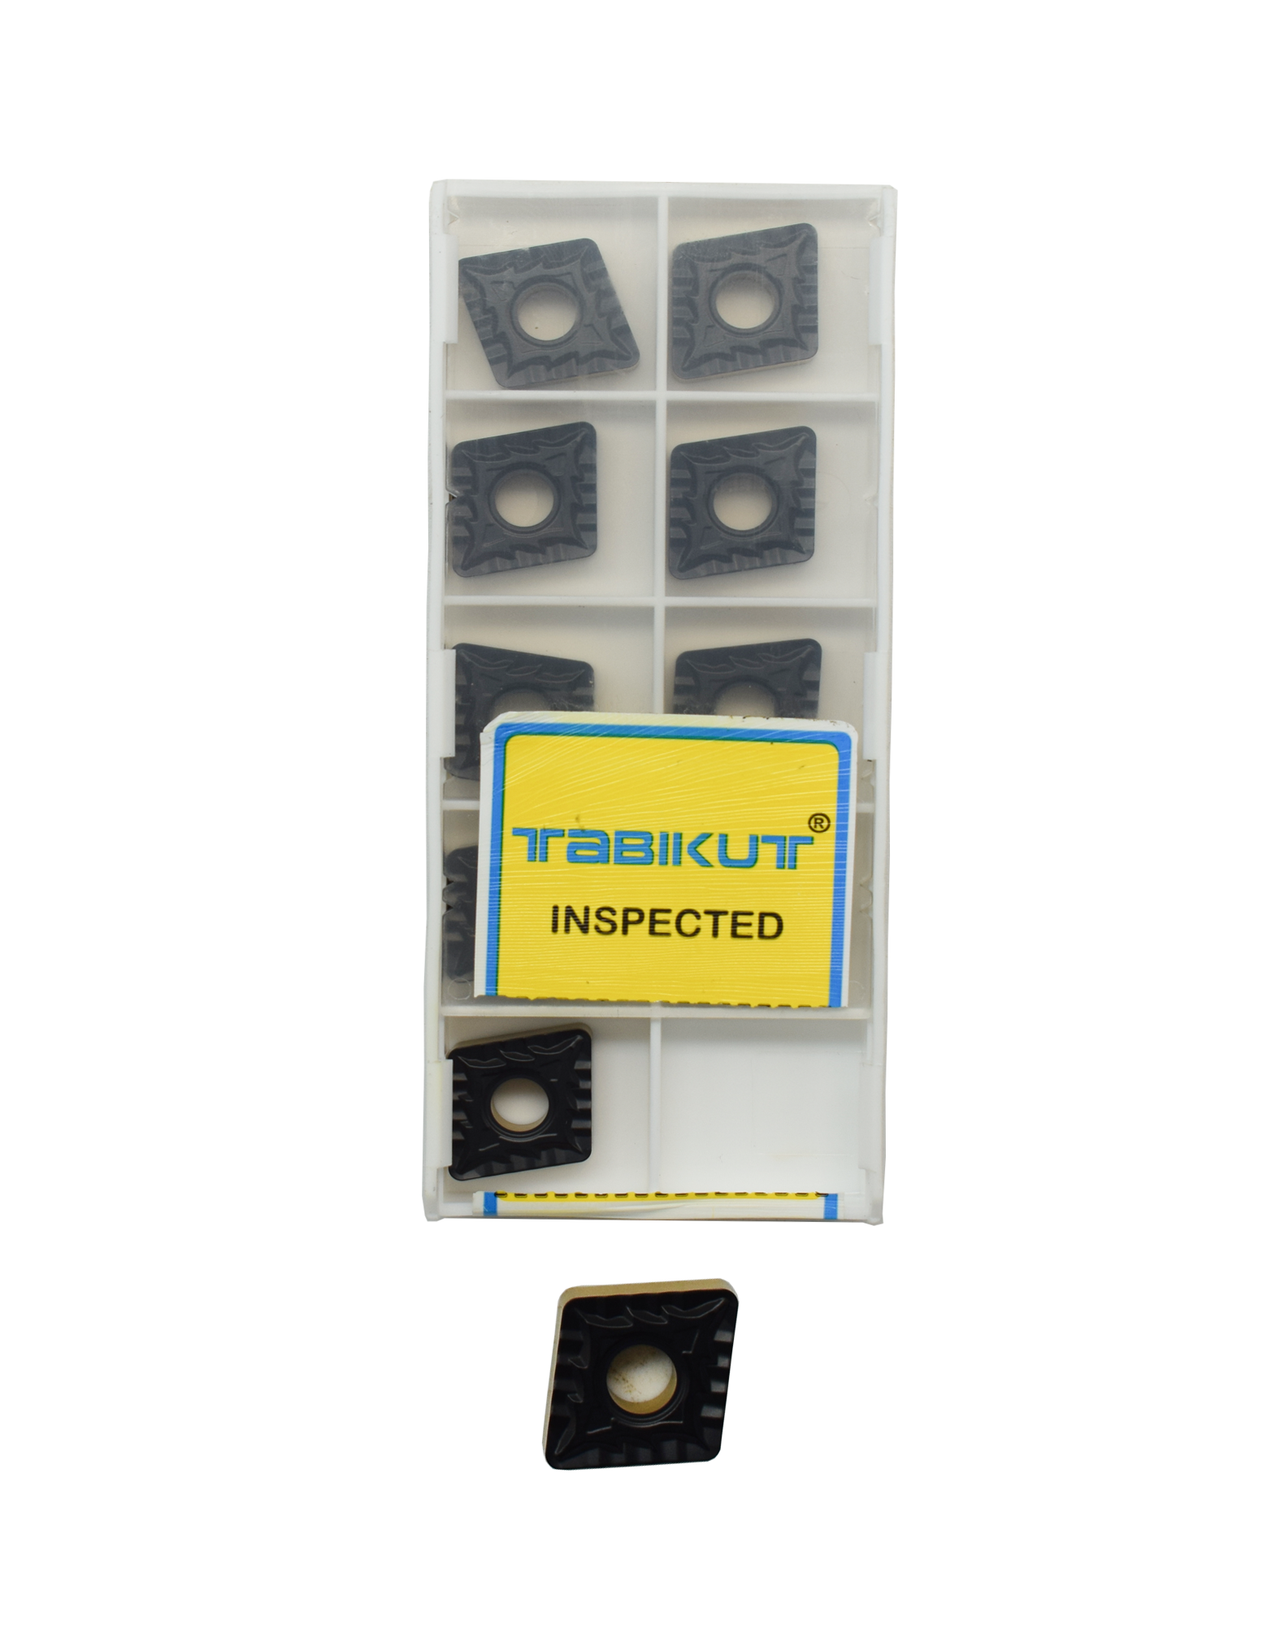 CNMG120404/08/12 CQ 4609 Chipbreaker insert steel grade of Tabikut pack of 10